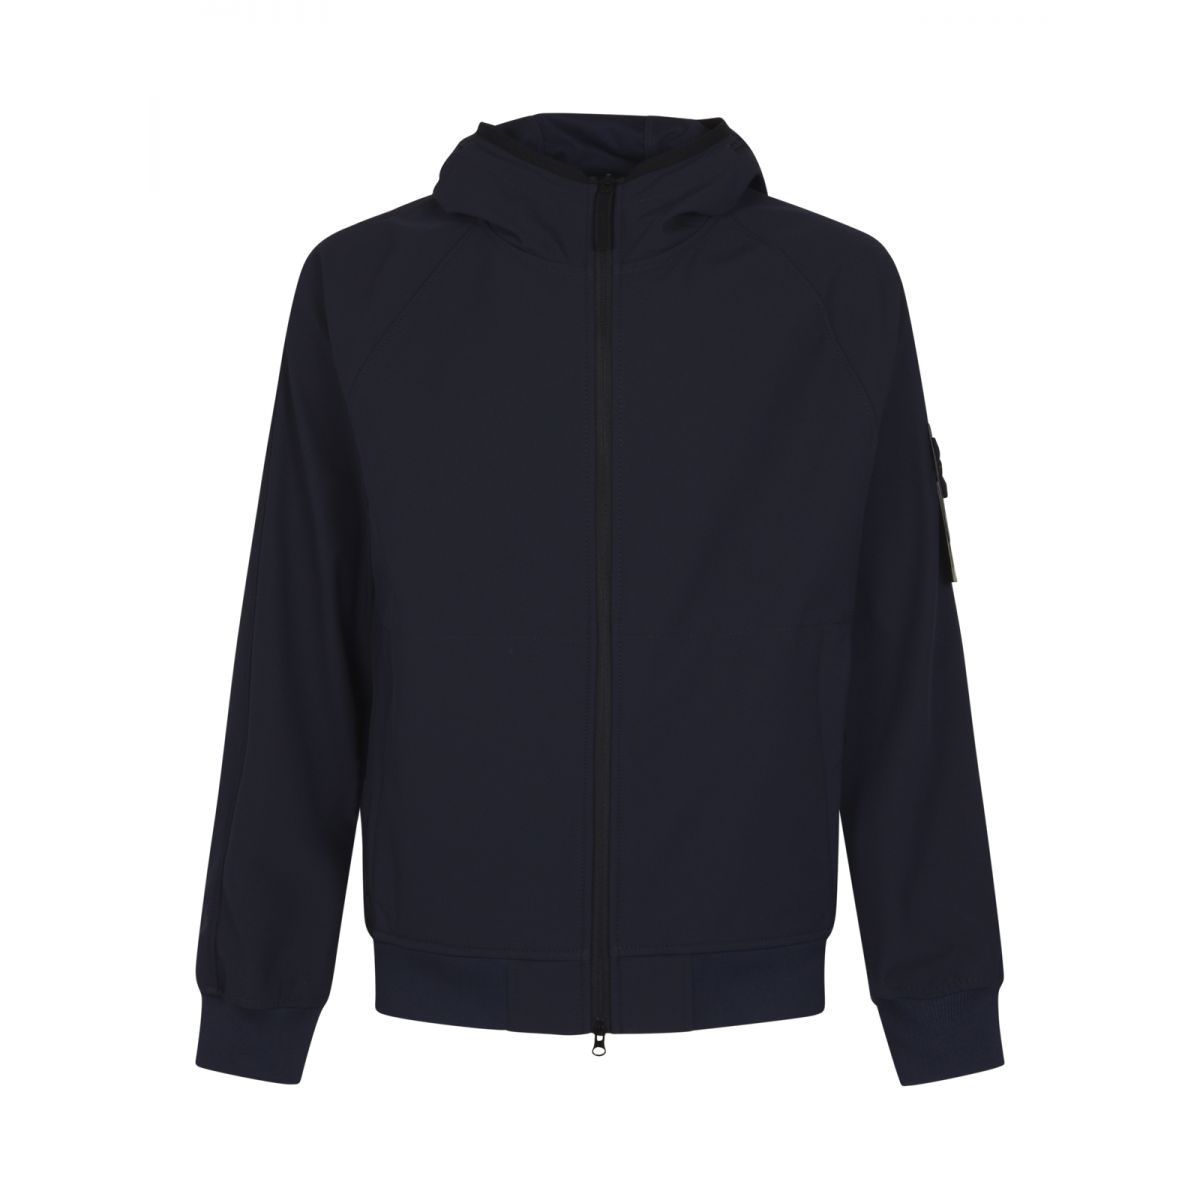 STONE ISLAND - Zip-up hooded jacket